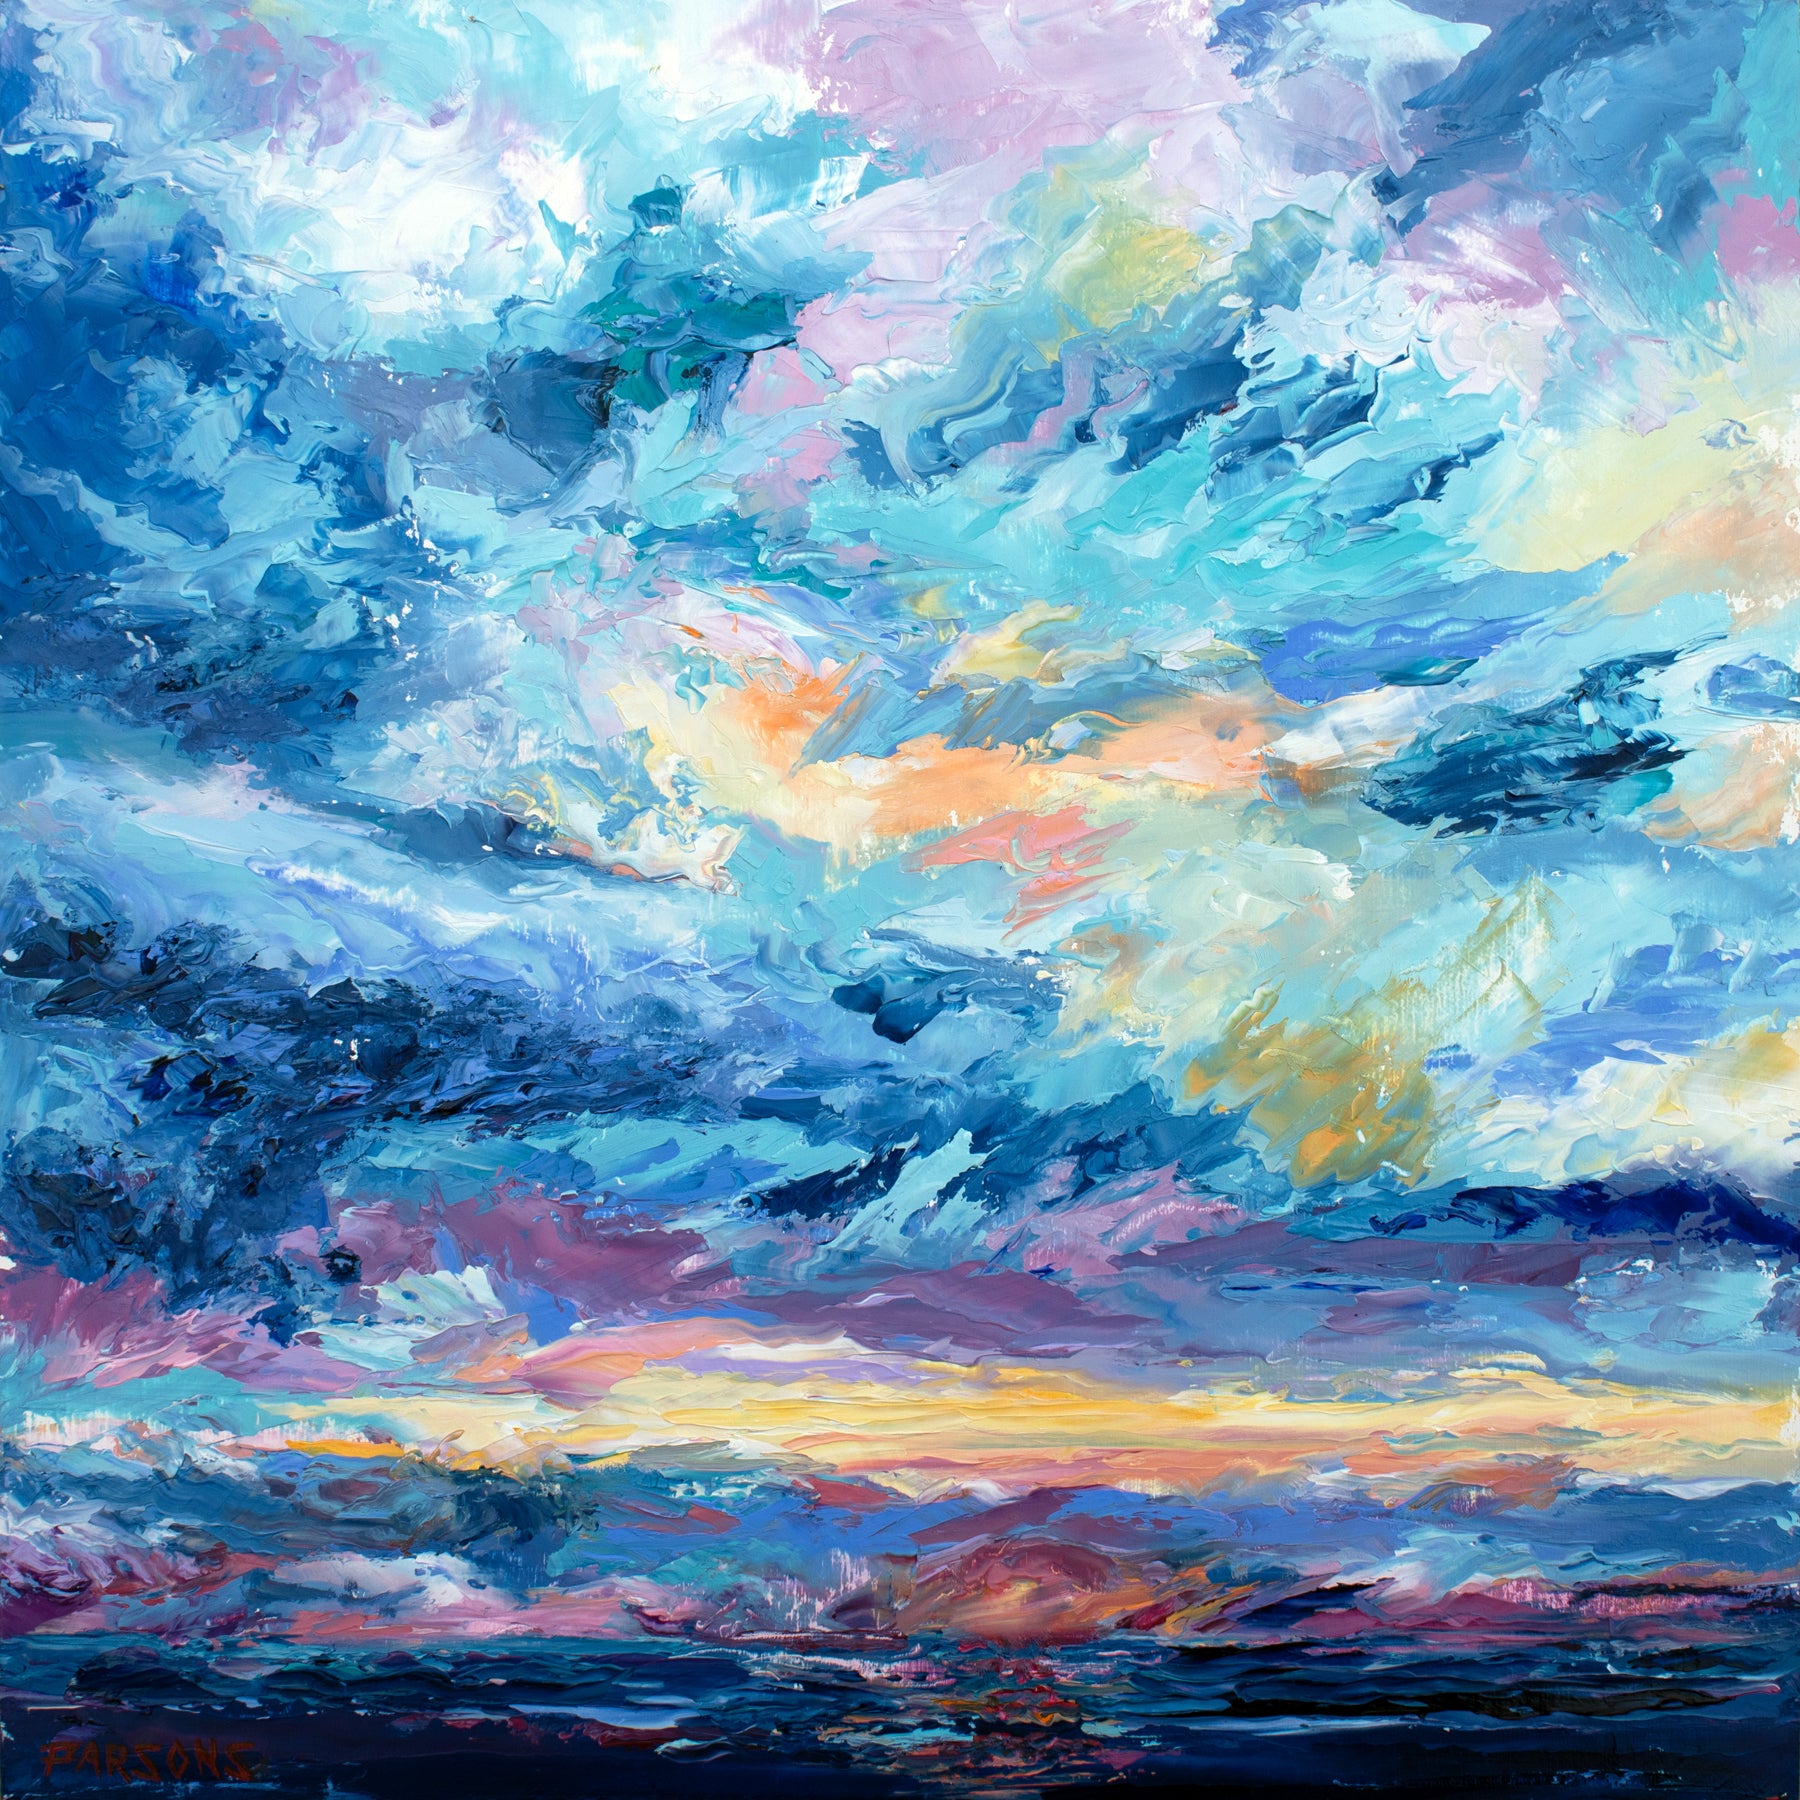 Ocean Sunrise. Original impressionist oil painting. 12x12". Oil on cradled birch panel. Palette knife impasto technique.